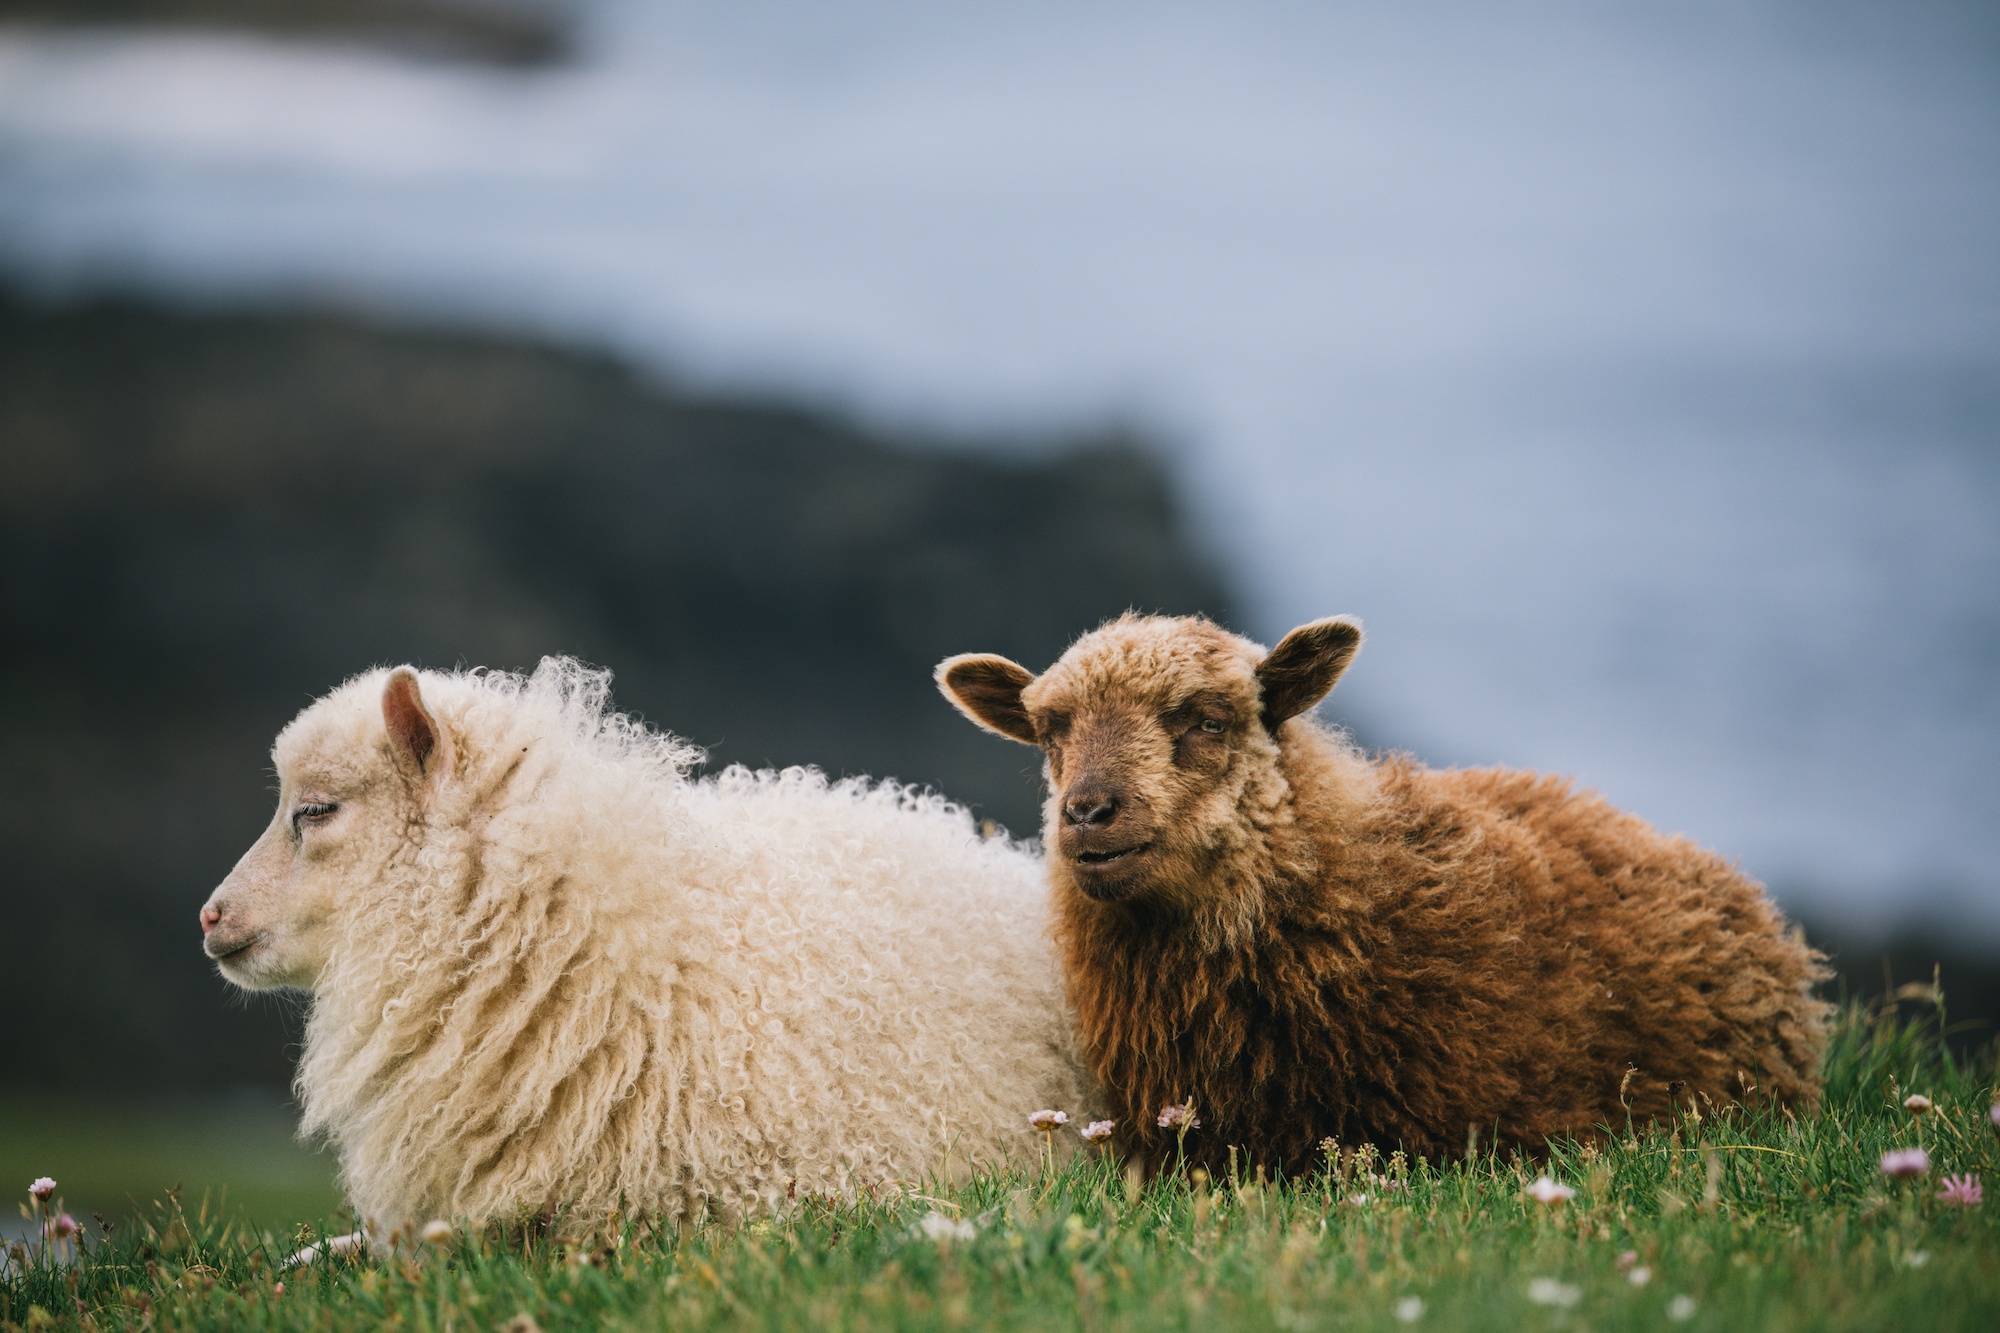 surprising things Faroe Islands